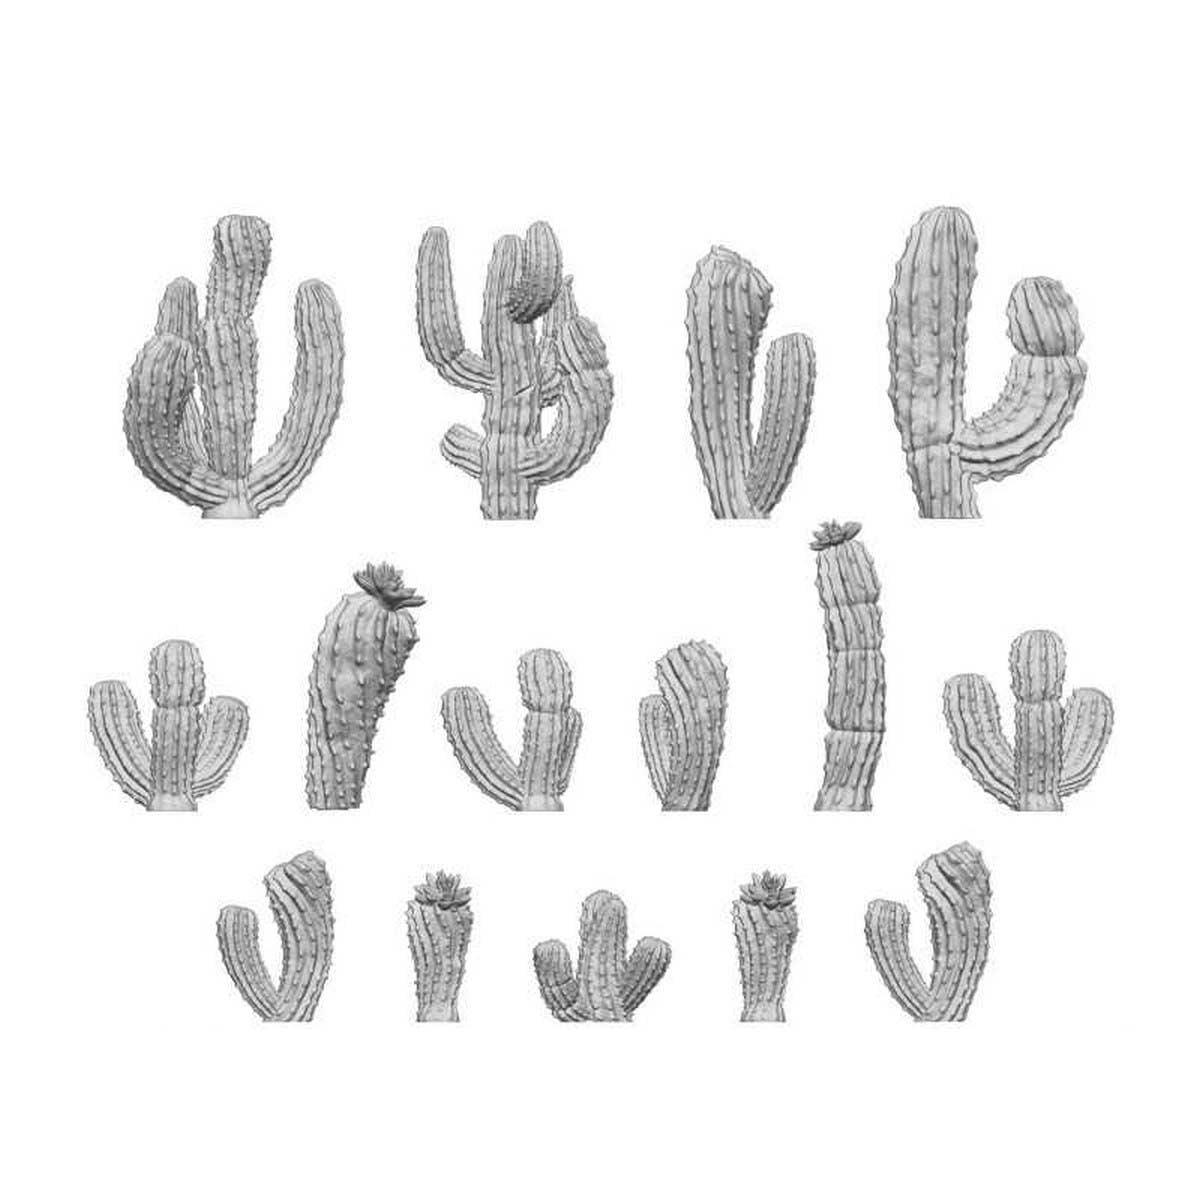 3D Printed Set - Saguaro Cactus